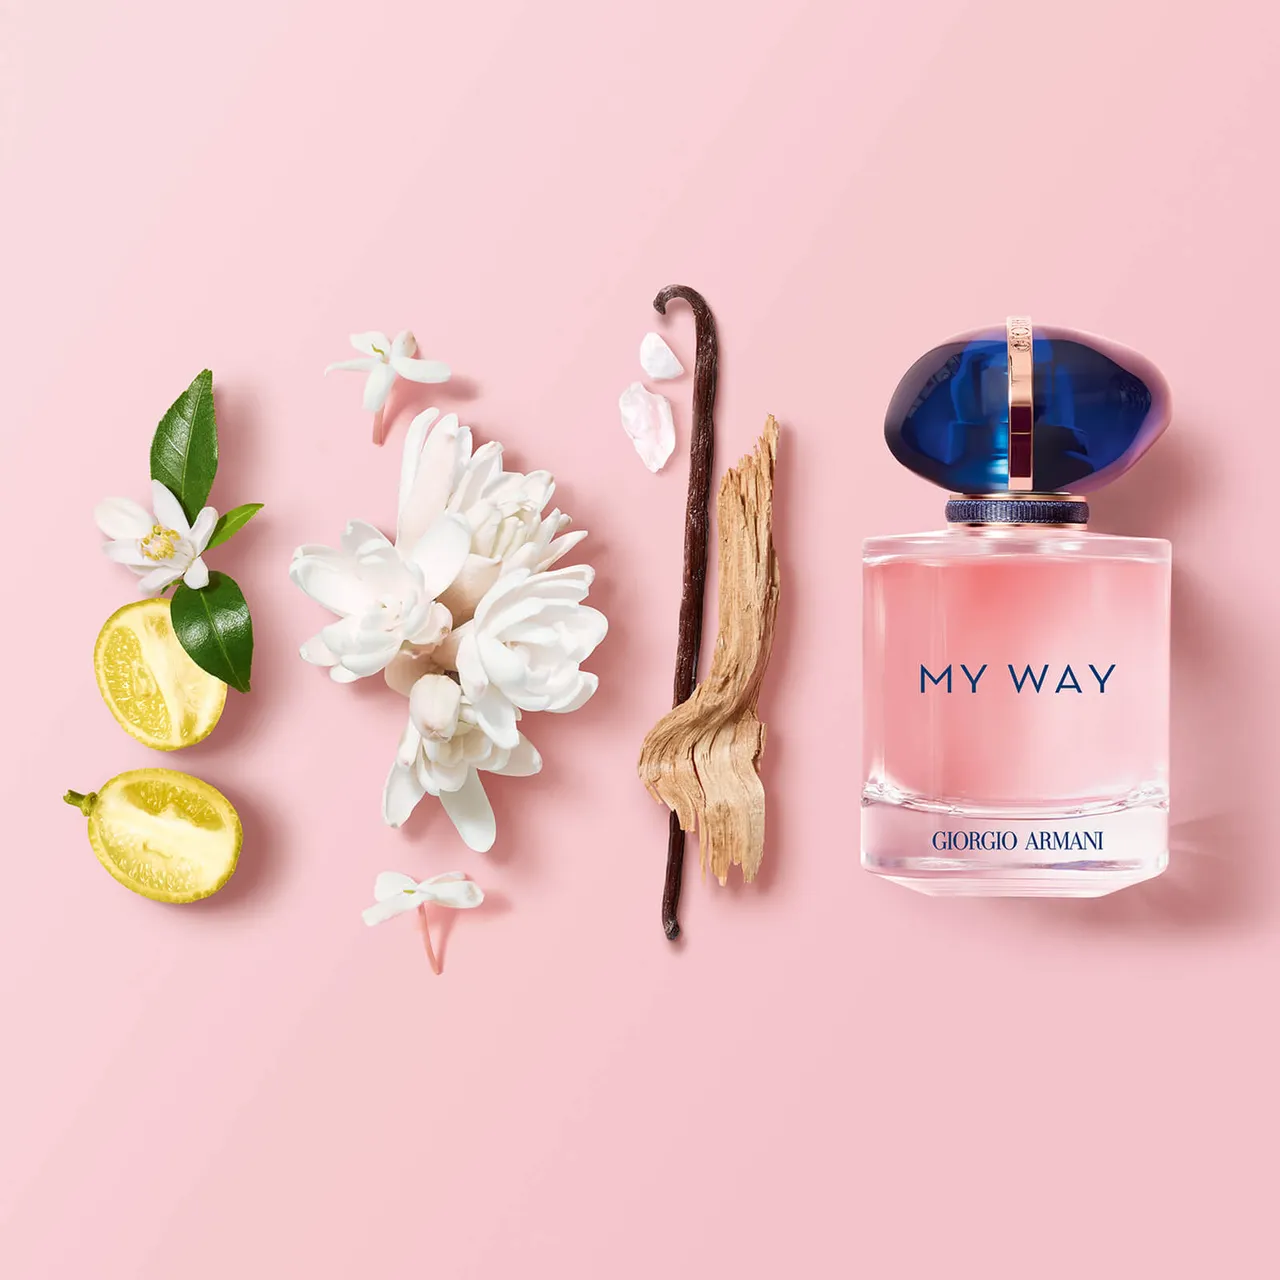 Armani My Way Eau de Parfum - 30ml